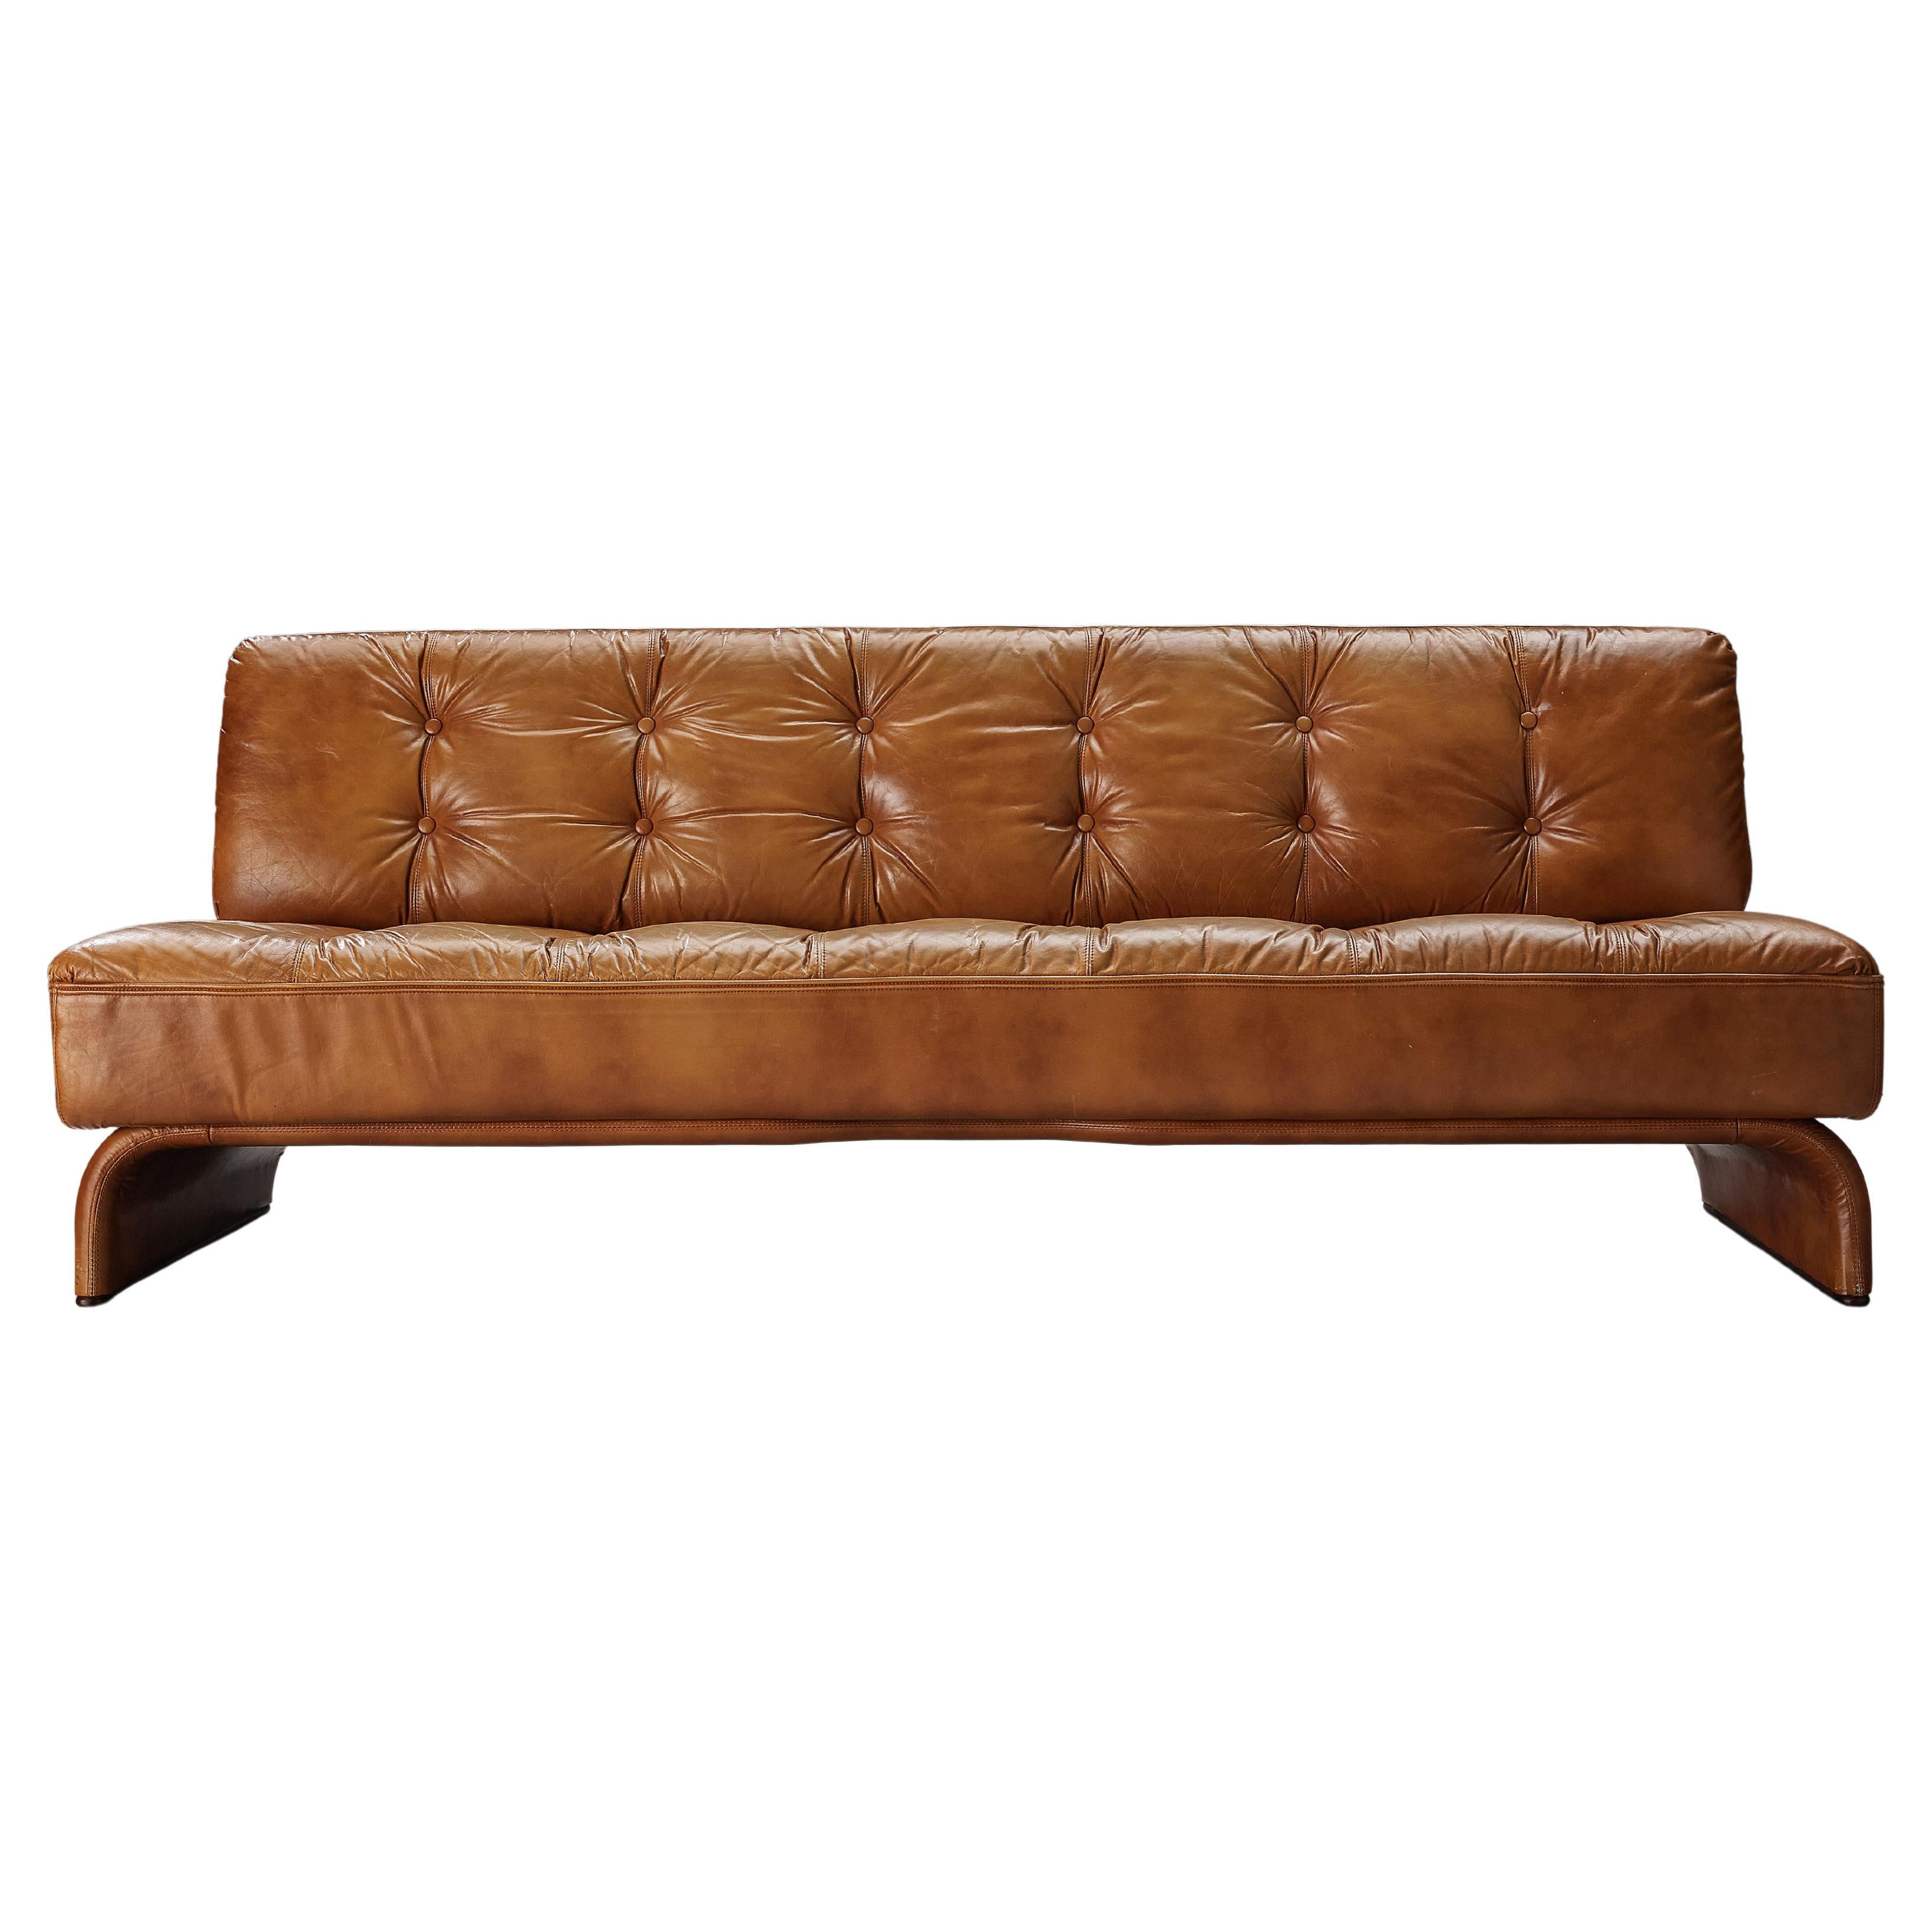 Johannes Spalt for Wittmann Constanze Sofa in Cognac Leather